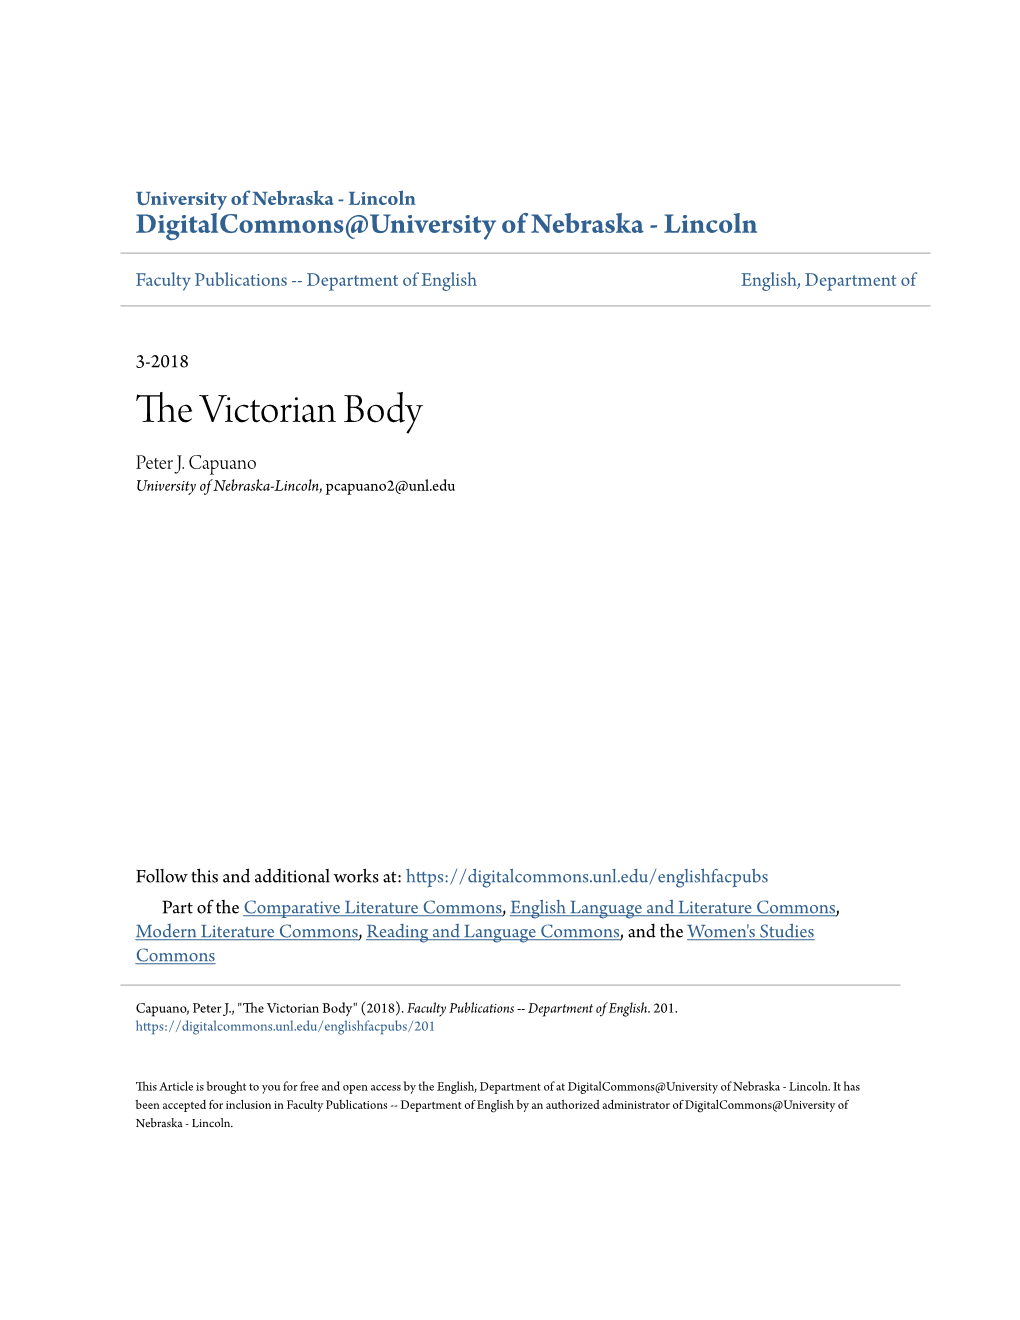 The Victorian Body